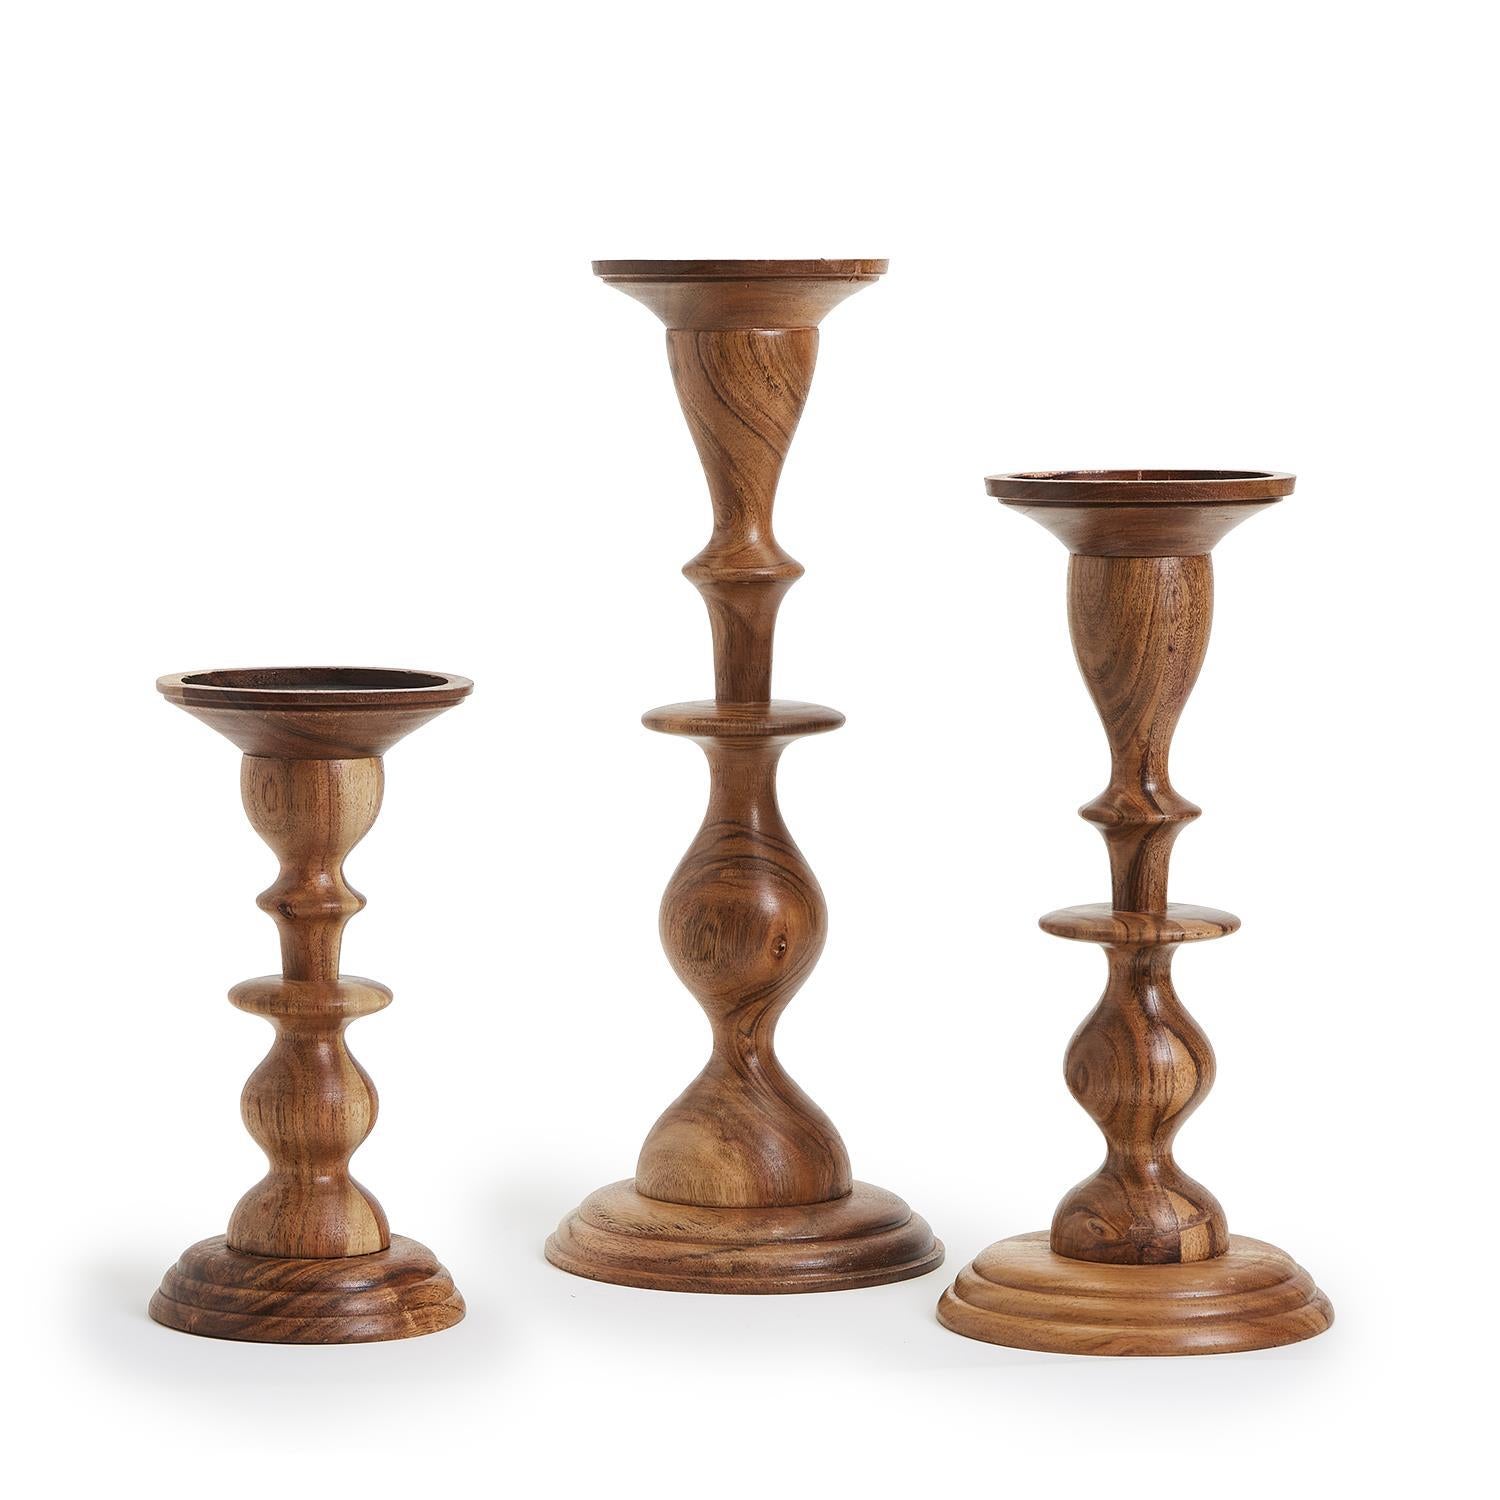 Wooden Pillar Candleholders - (three sizes)